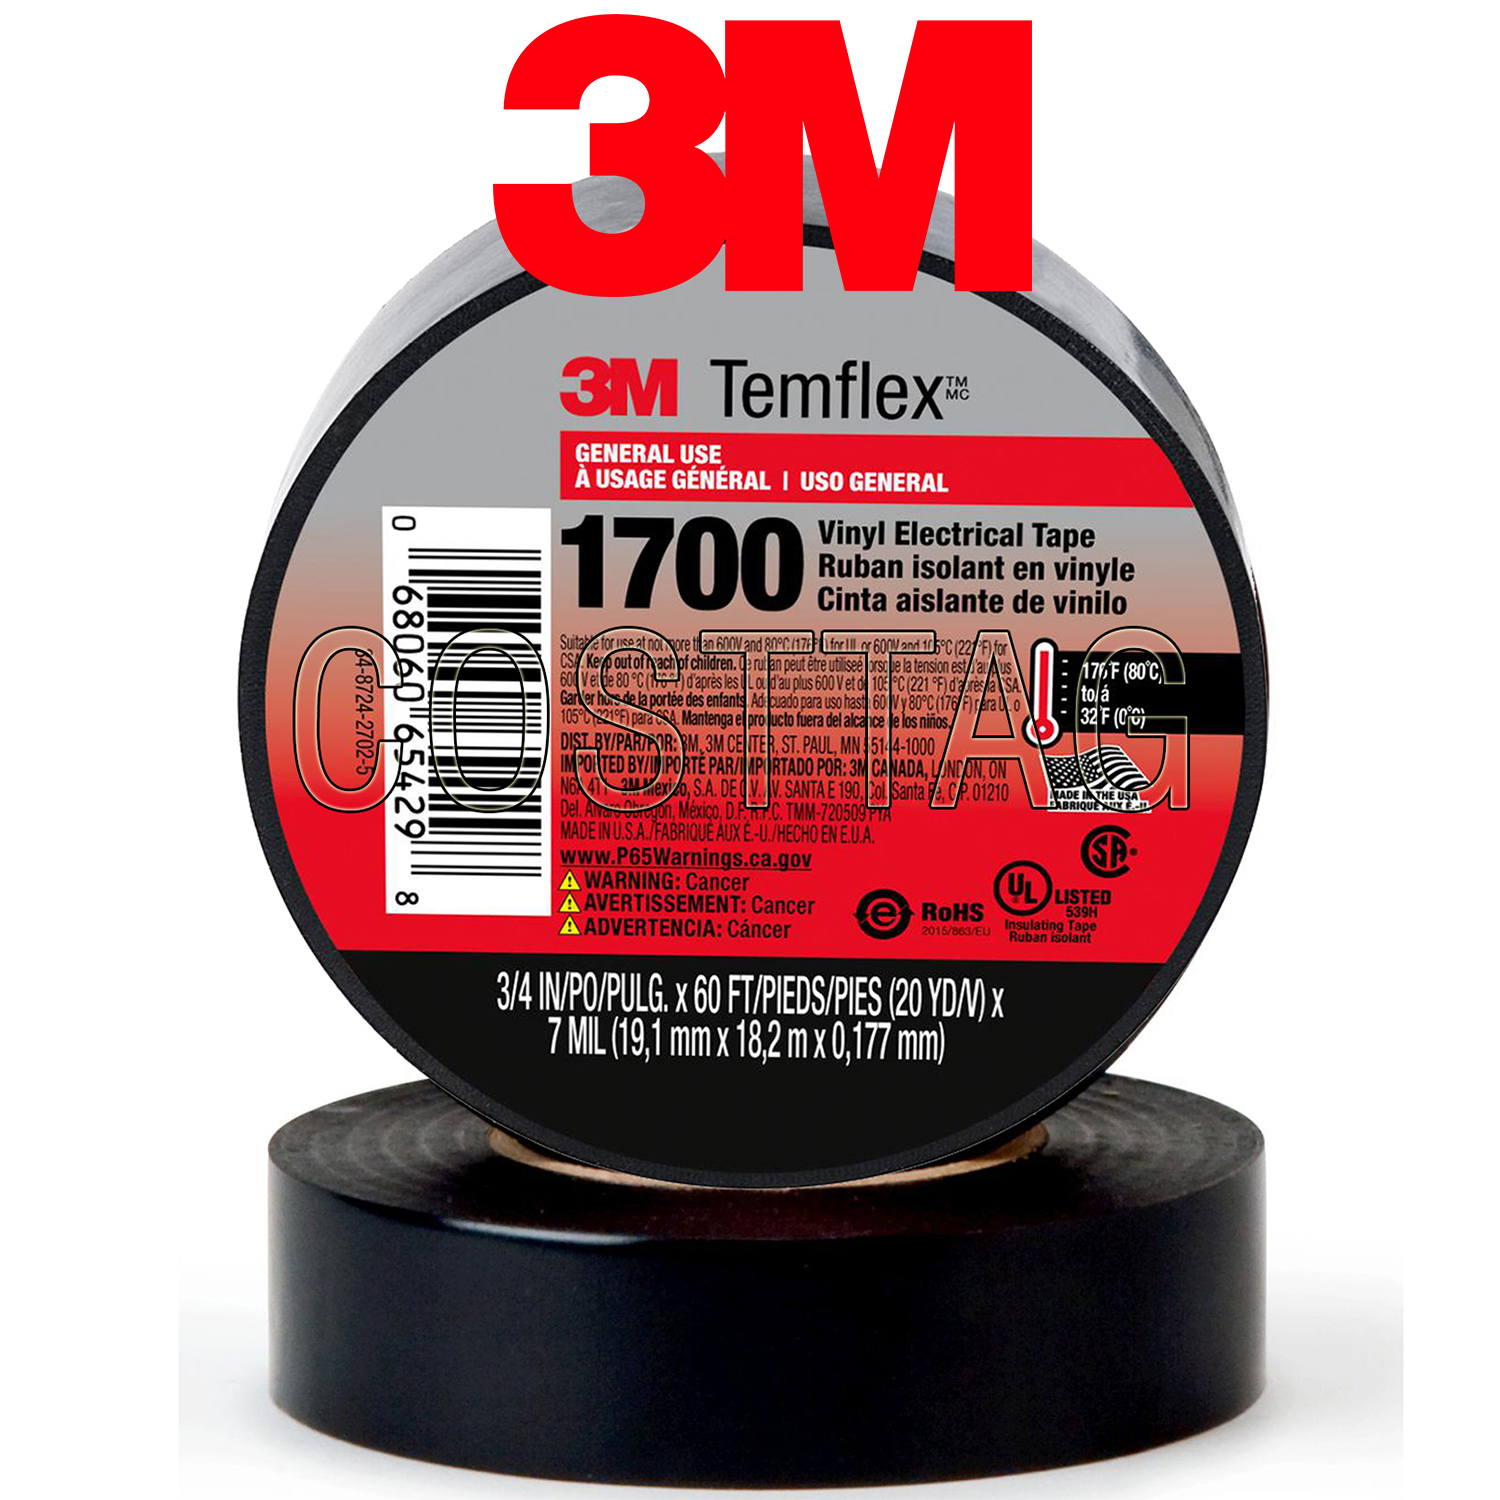 (50 ROLLS) GENUINE 3M TEMELEX 1700 VINYL ELECTRICAL TAPE UL, BLACK 3/4 x 60 FT